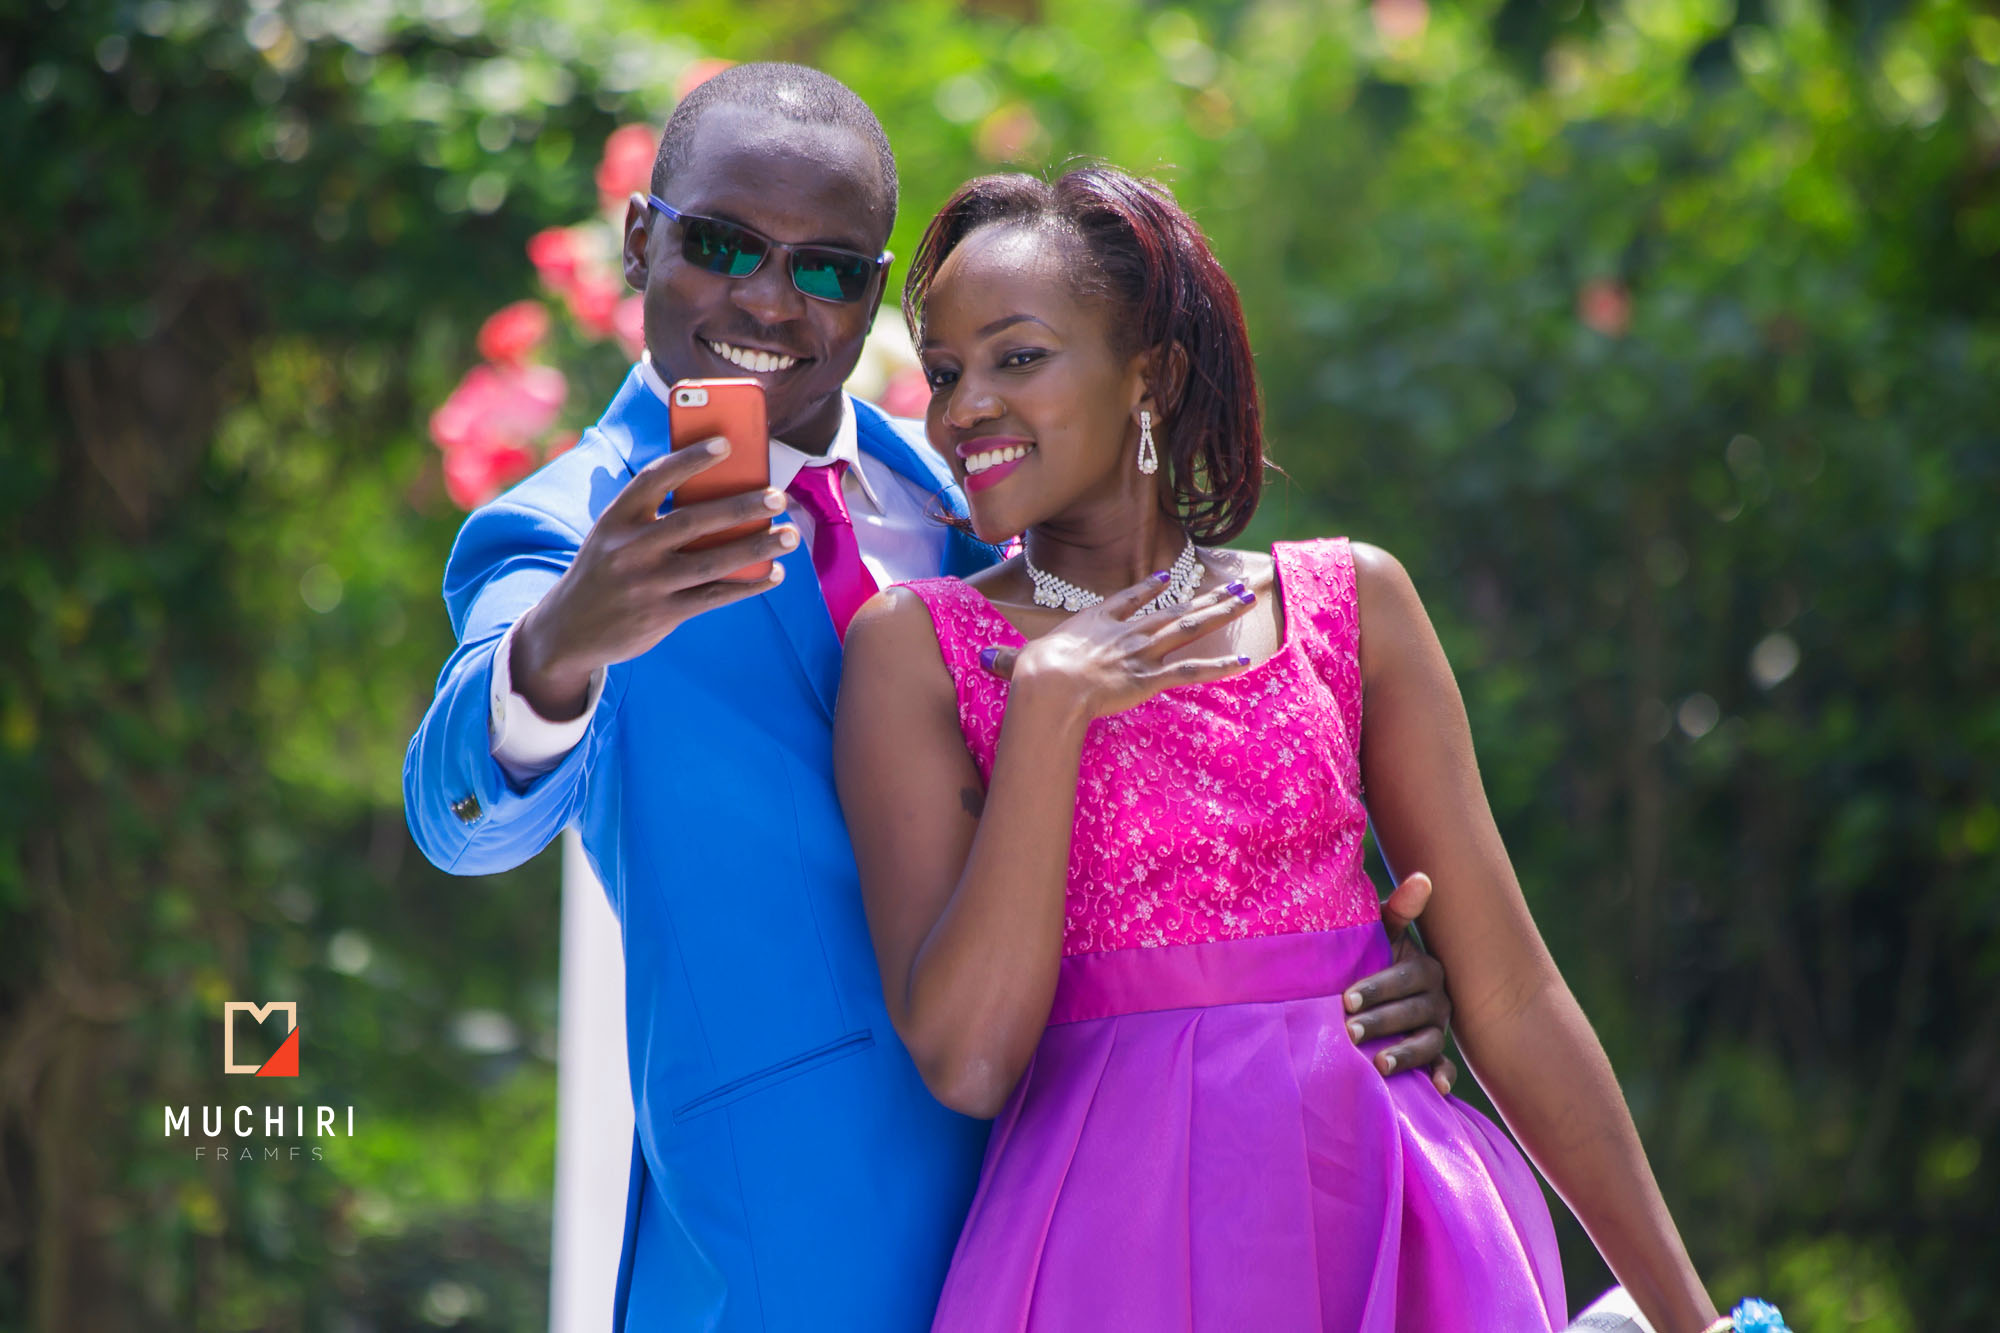 Top photographers in Kenya